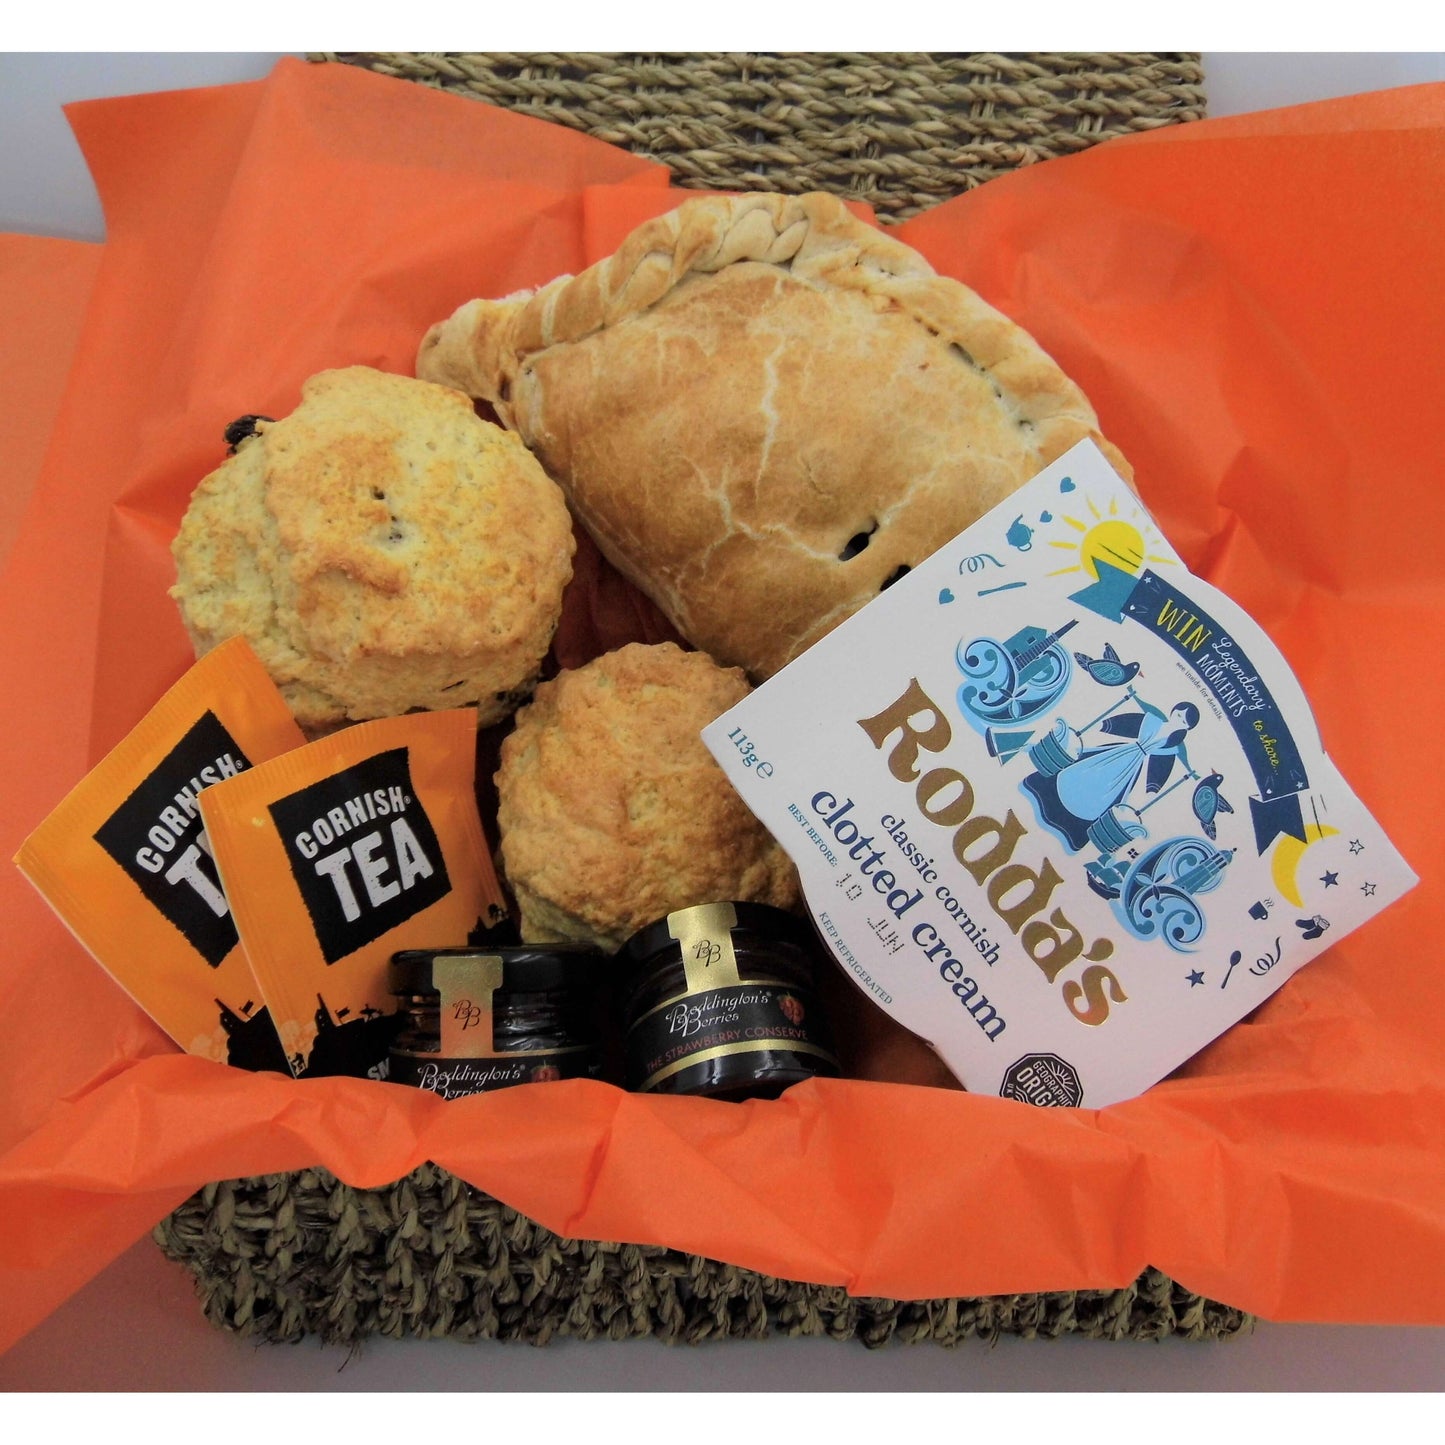 'Proper Job' hamper for one - Cornish cream tea for one with a Cornish pasty in a seagrass hamper basket